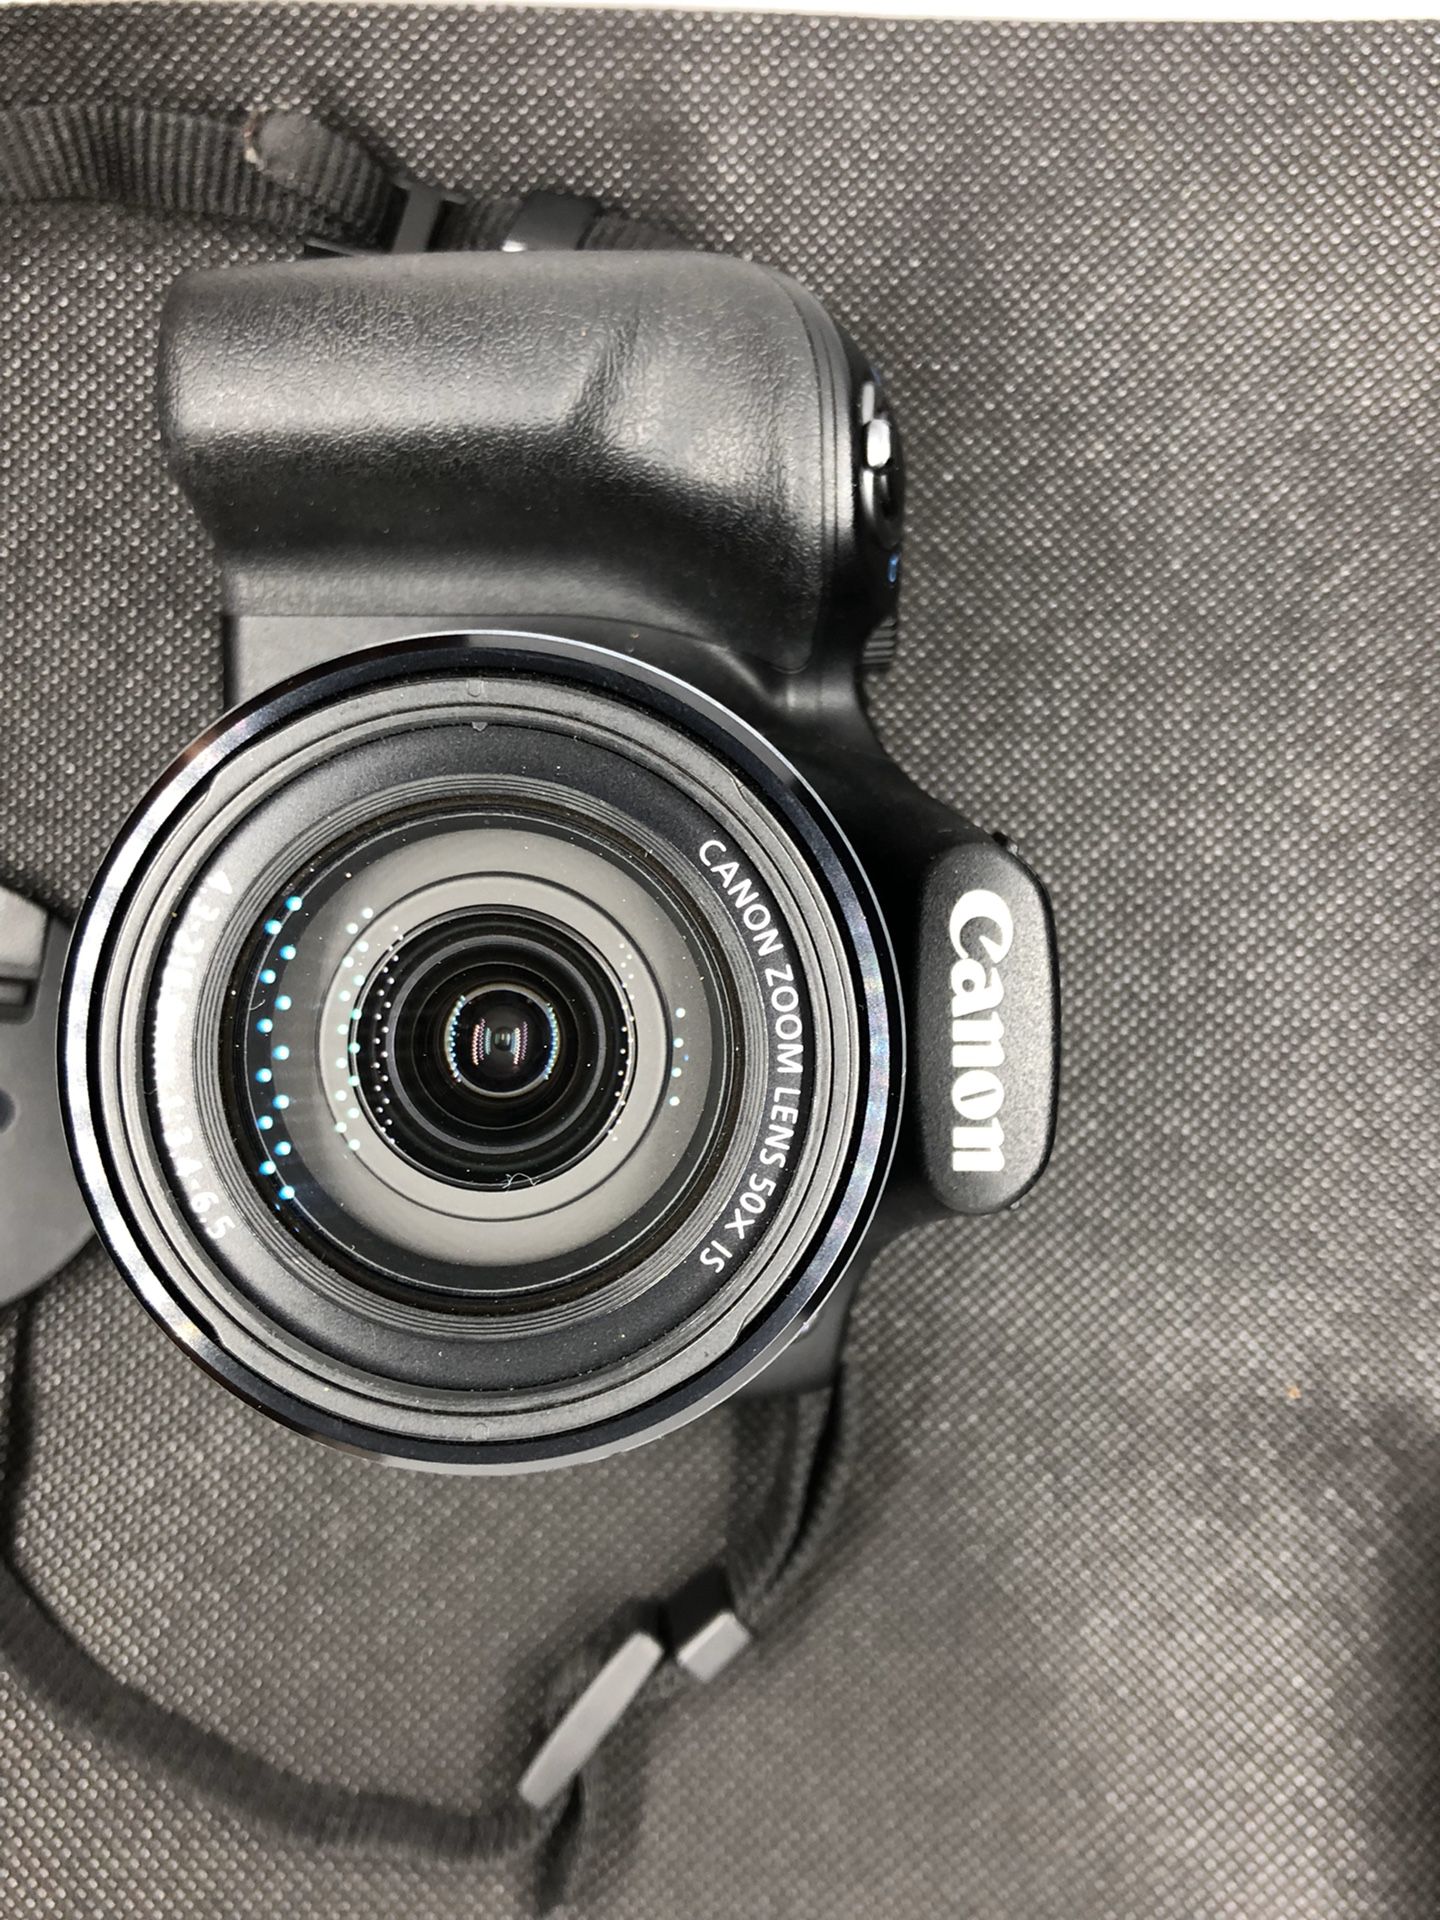 Canon PowerShot SX530 HS digital camera